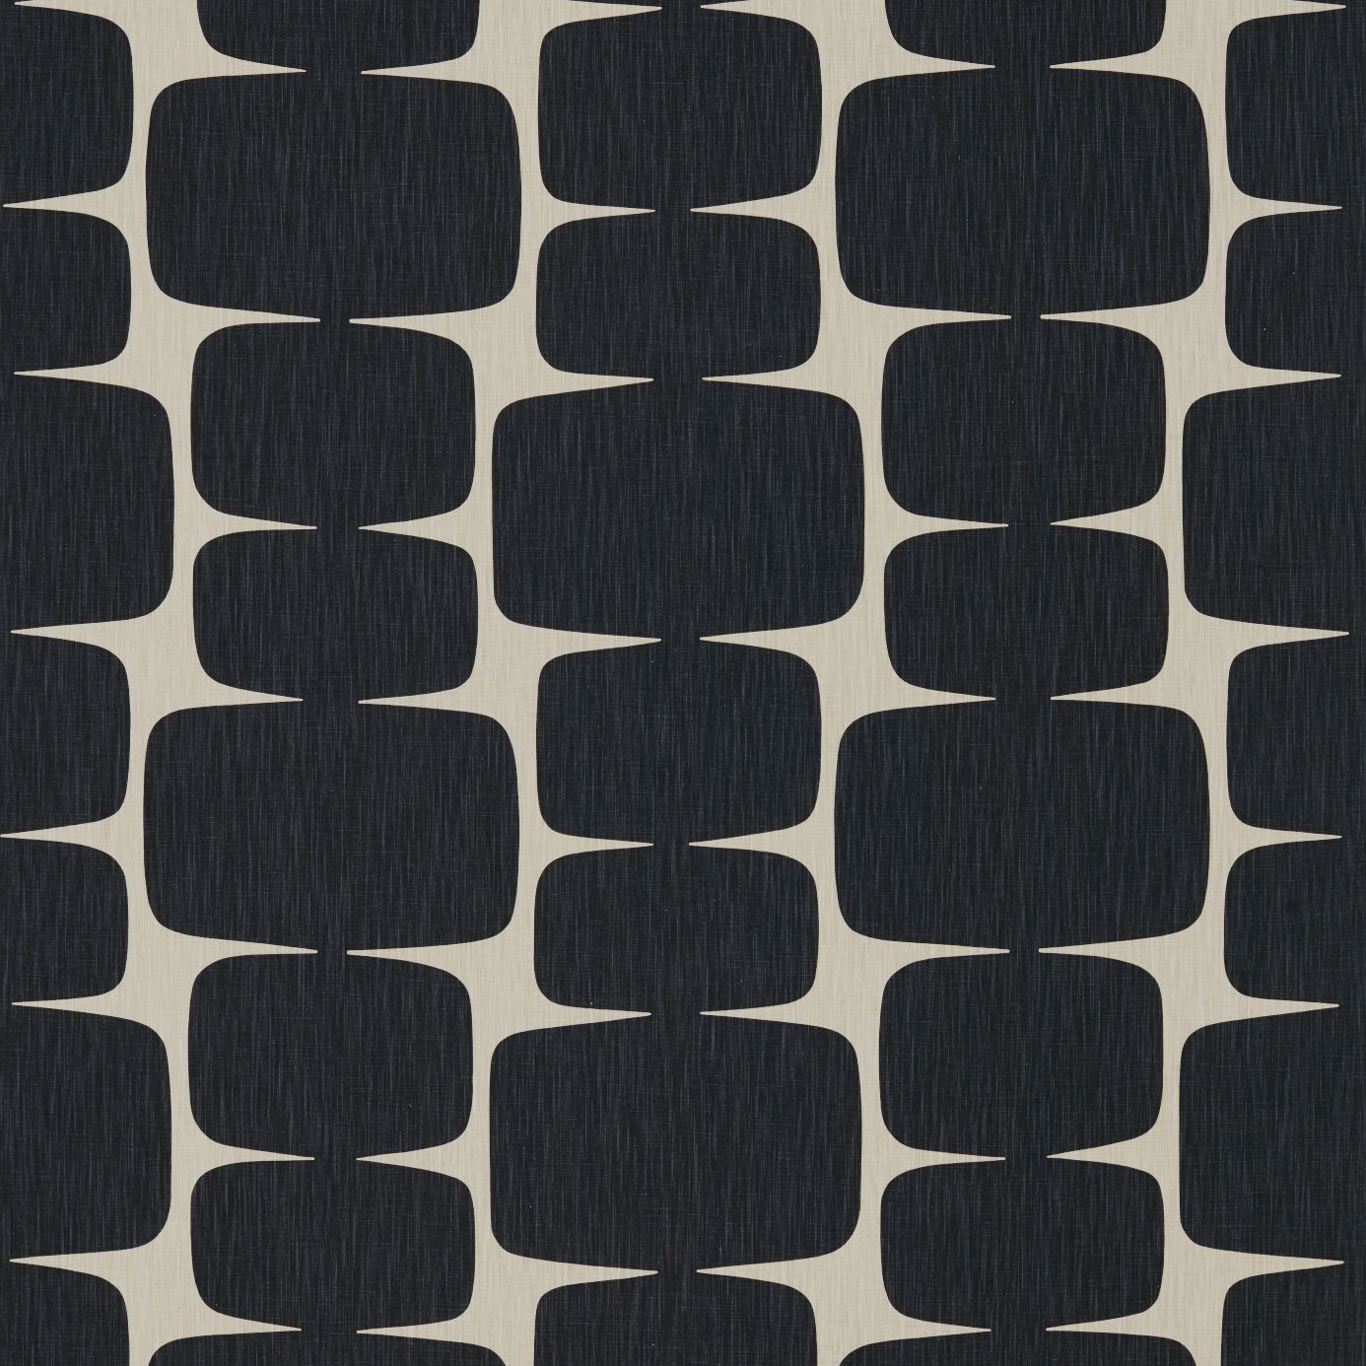 Lohko Liquorice/Hemp Fabric By Scion